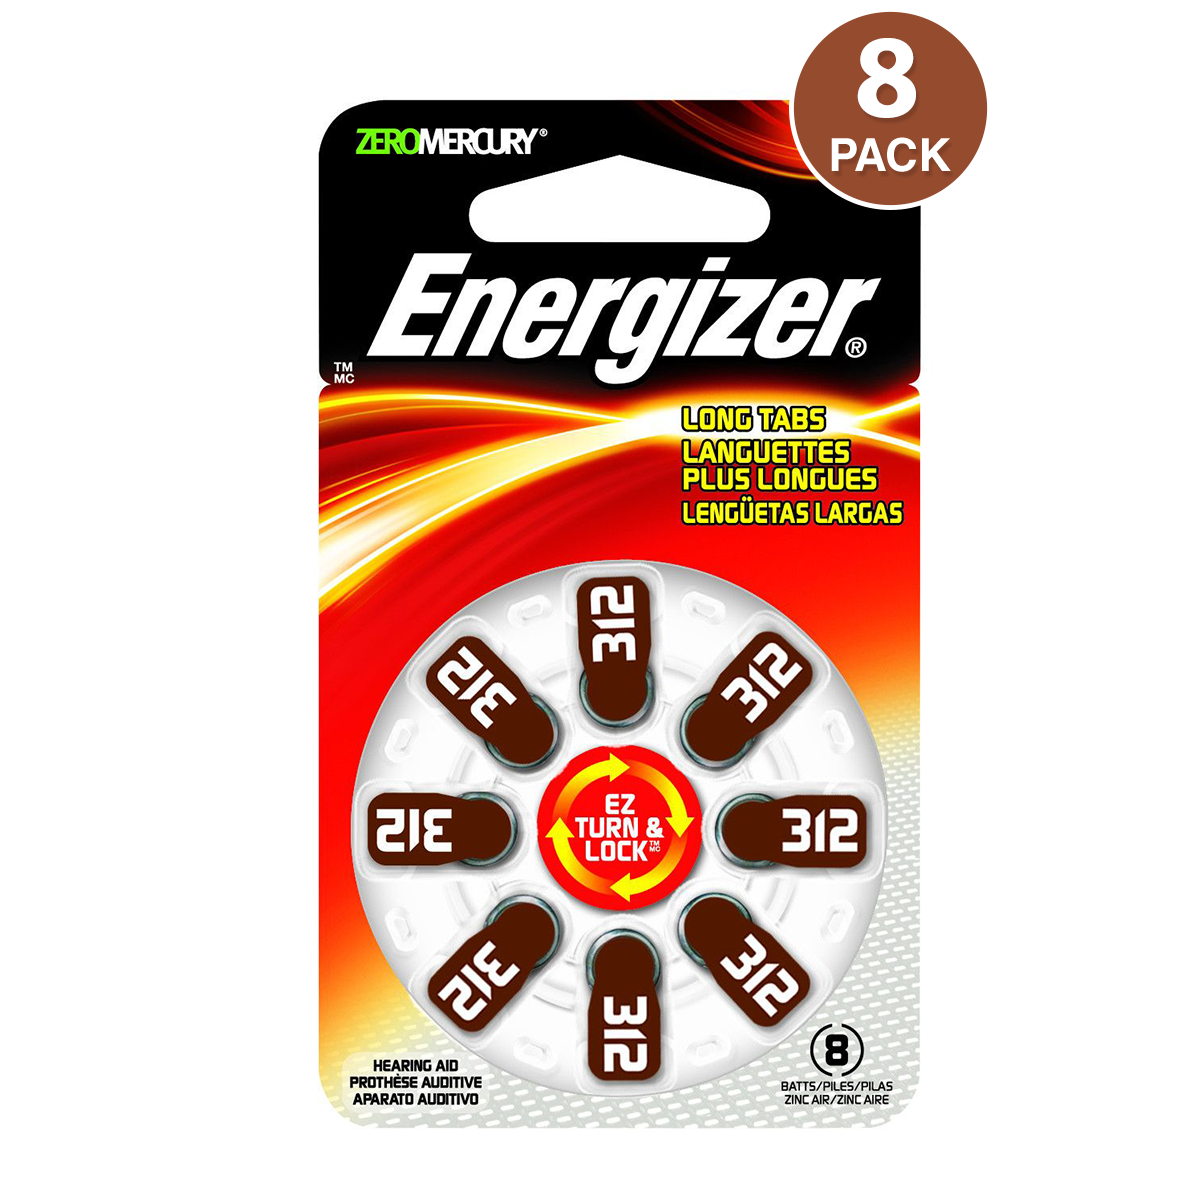 Energizer Size 312, EZ Lock & Turn Zero Mercury, Hearing Aid Battery (8 pcs)